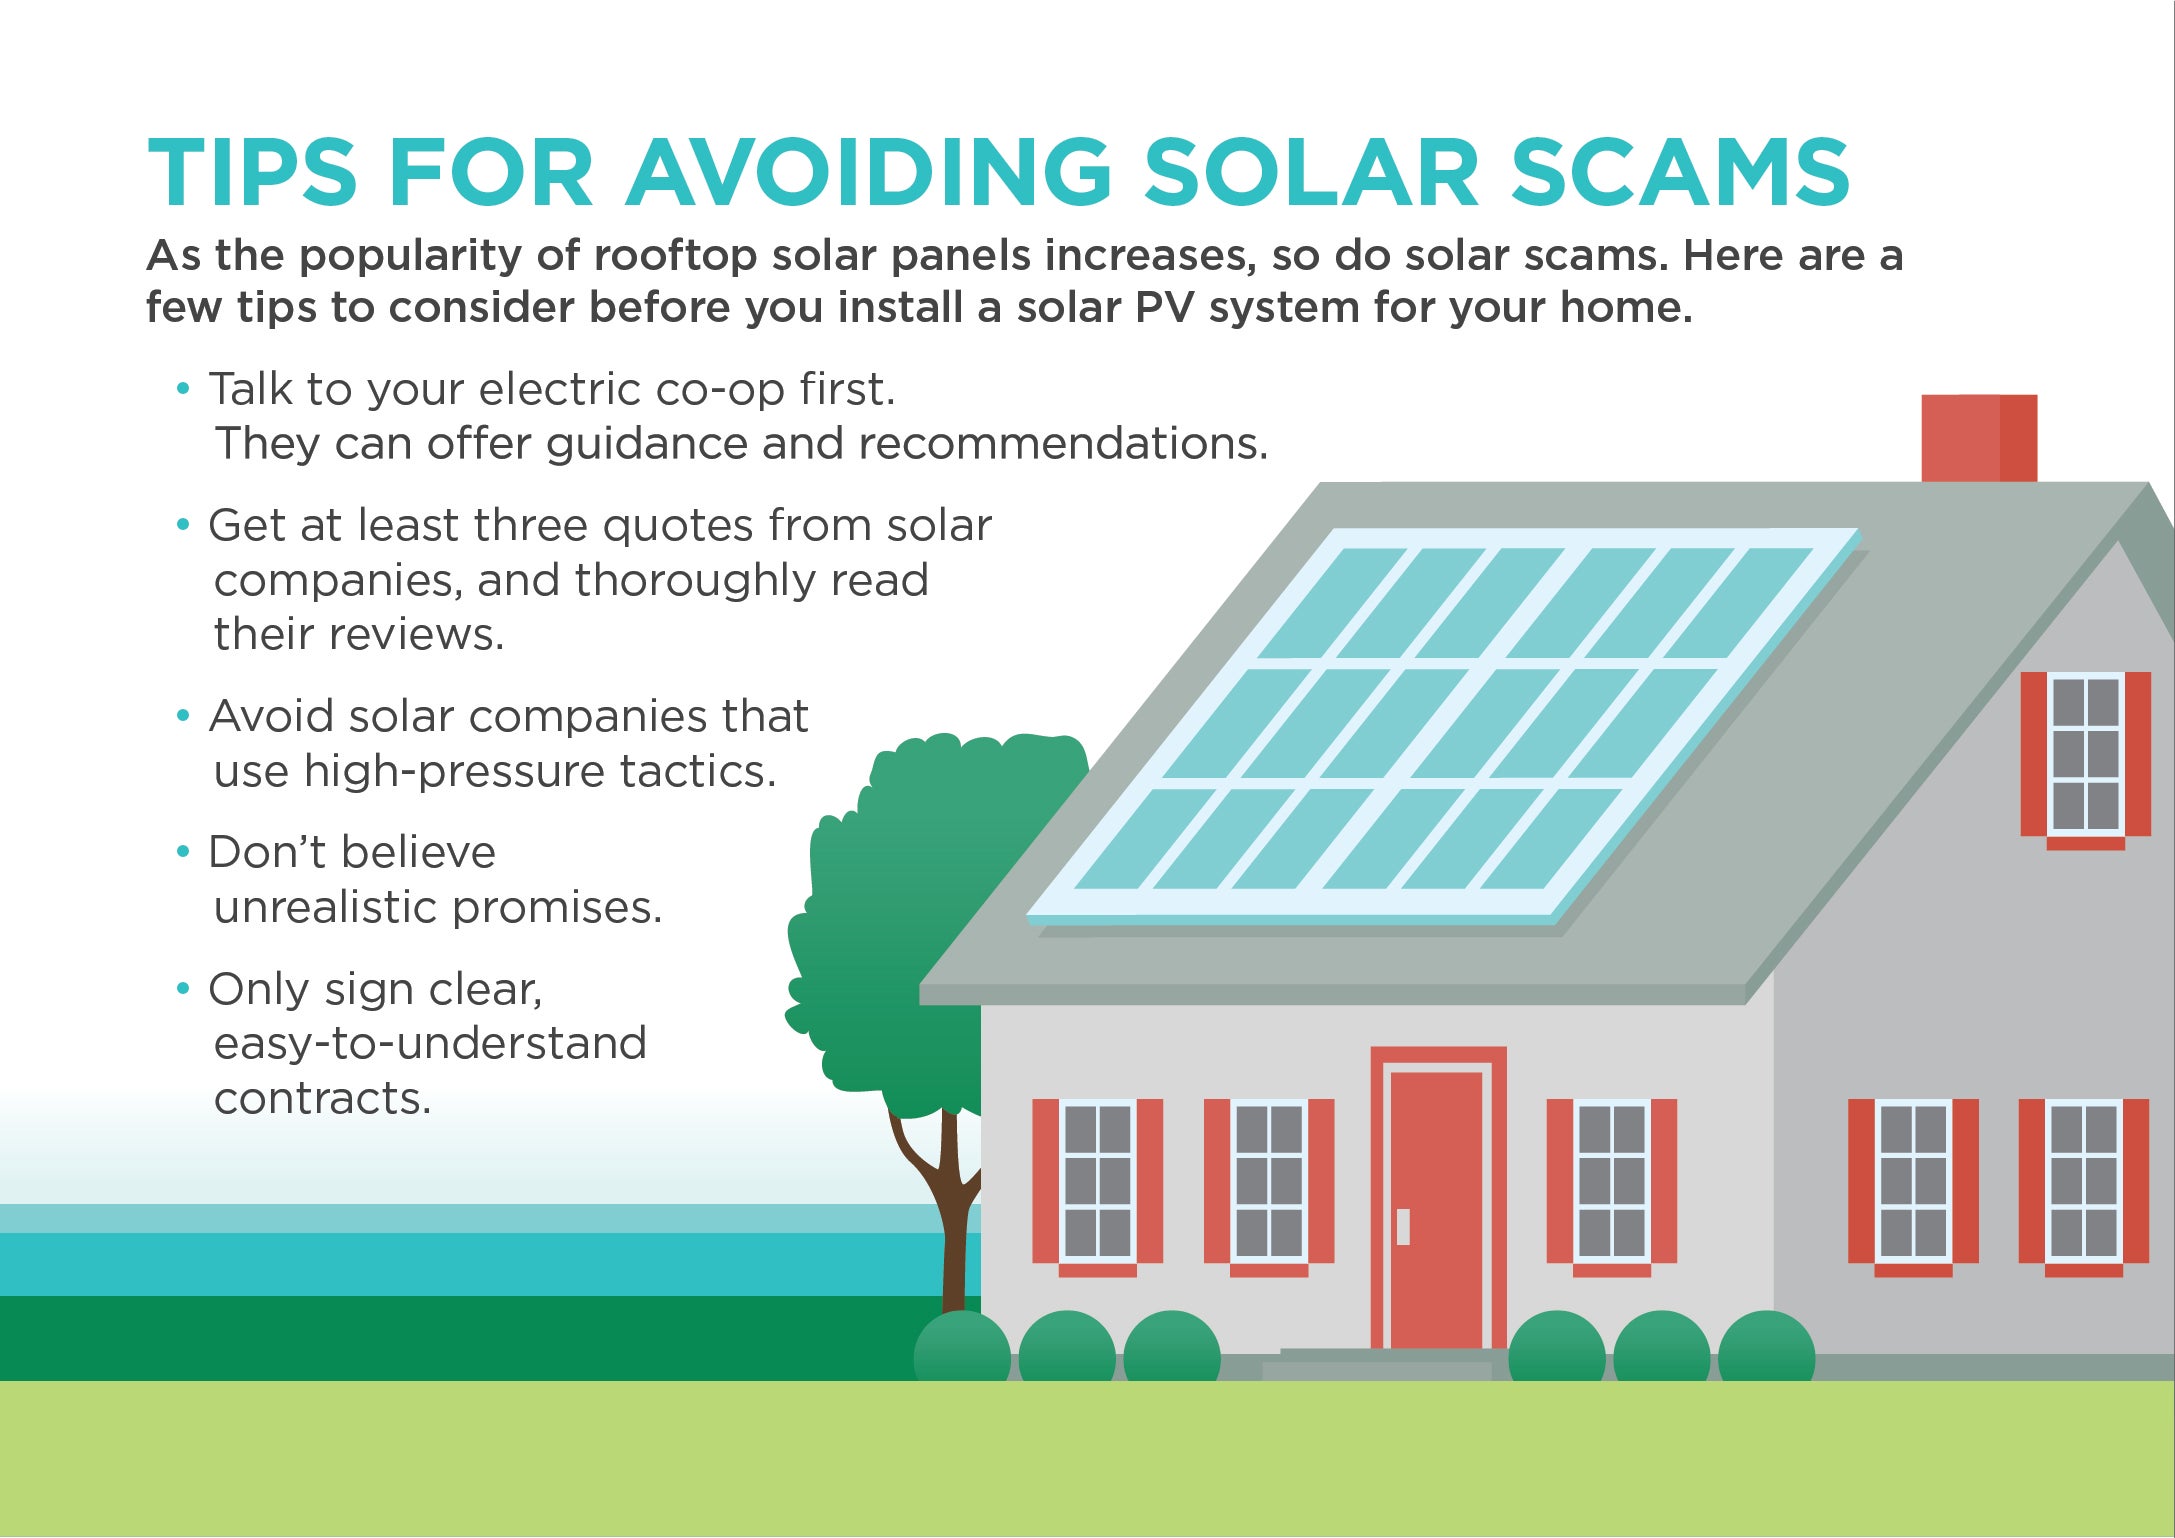 Tips for Avoiding solar scams